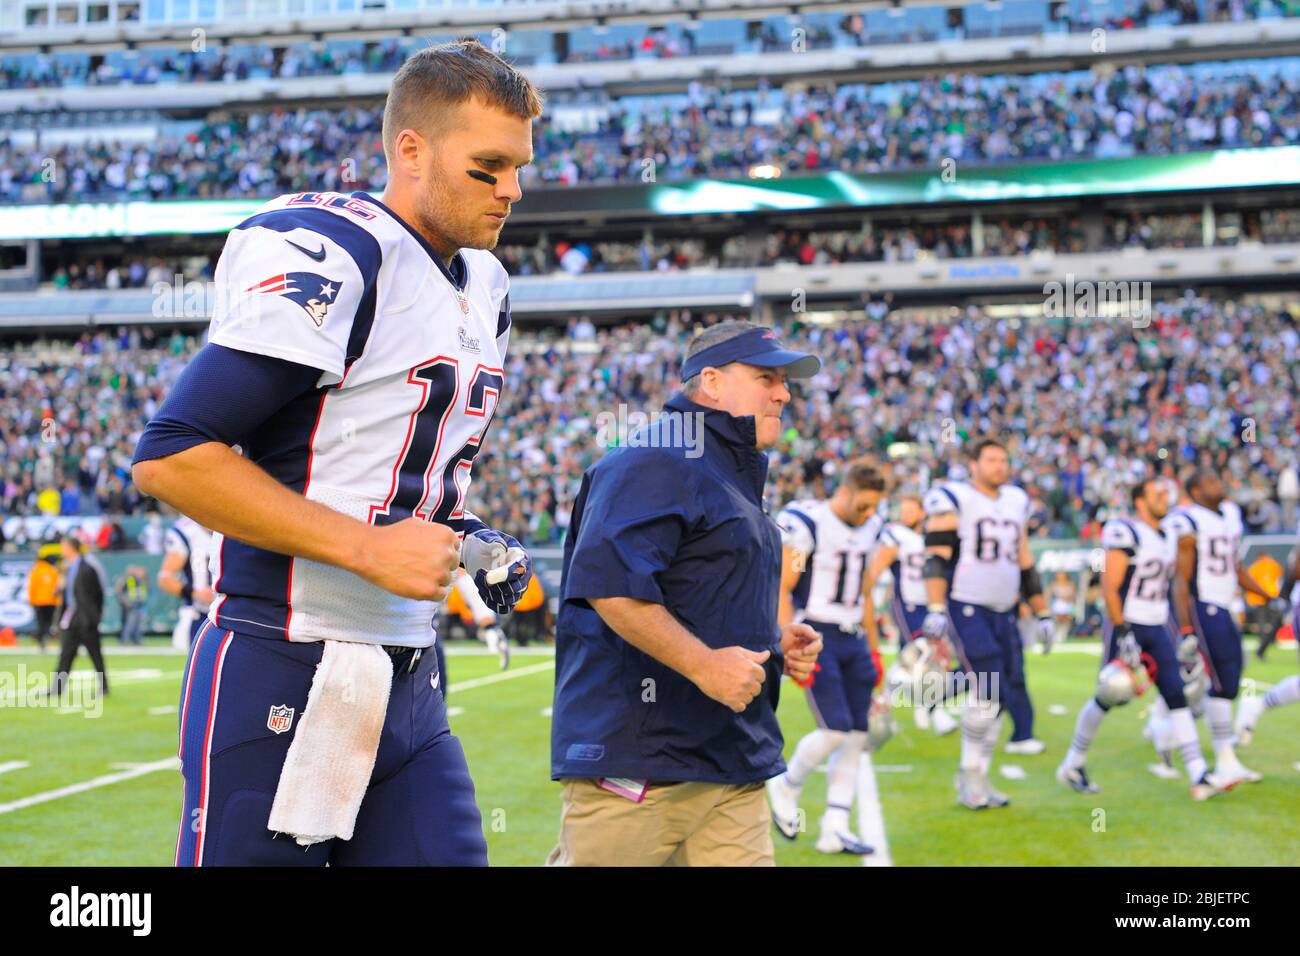 20. Oktober 2013: Der Quarterback der New England Patriots Tom Brady (12) geht vom Feld, nachdem die New York Jets die New England Patriots 30-27 besiegt hatten Stockfoto